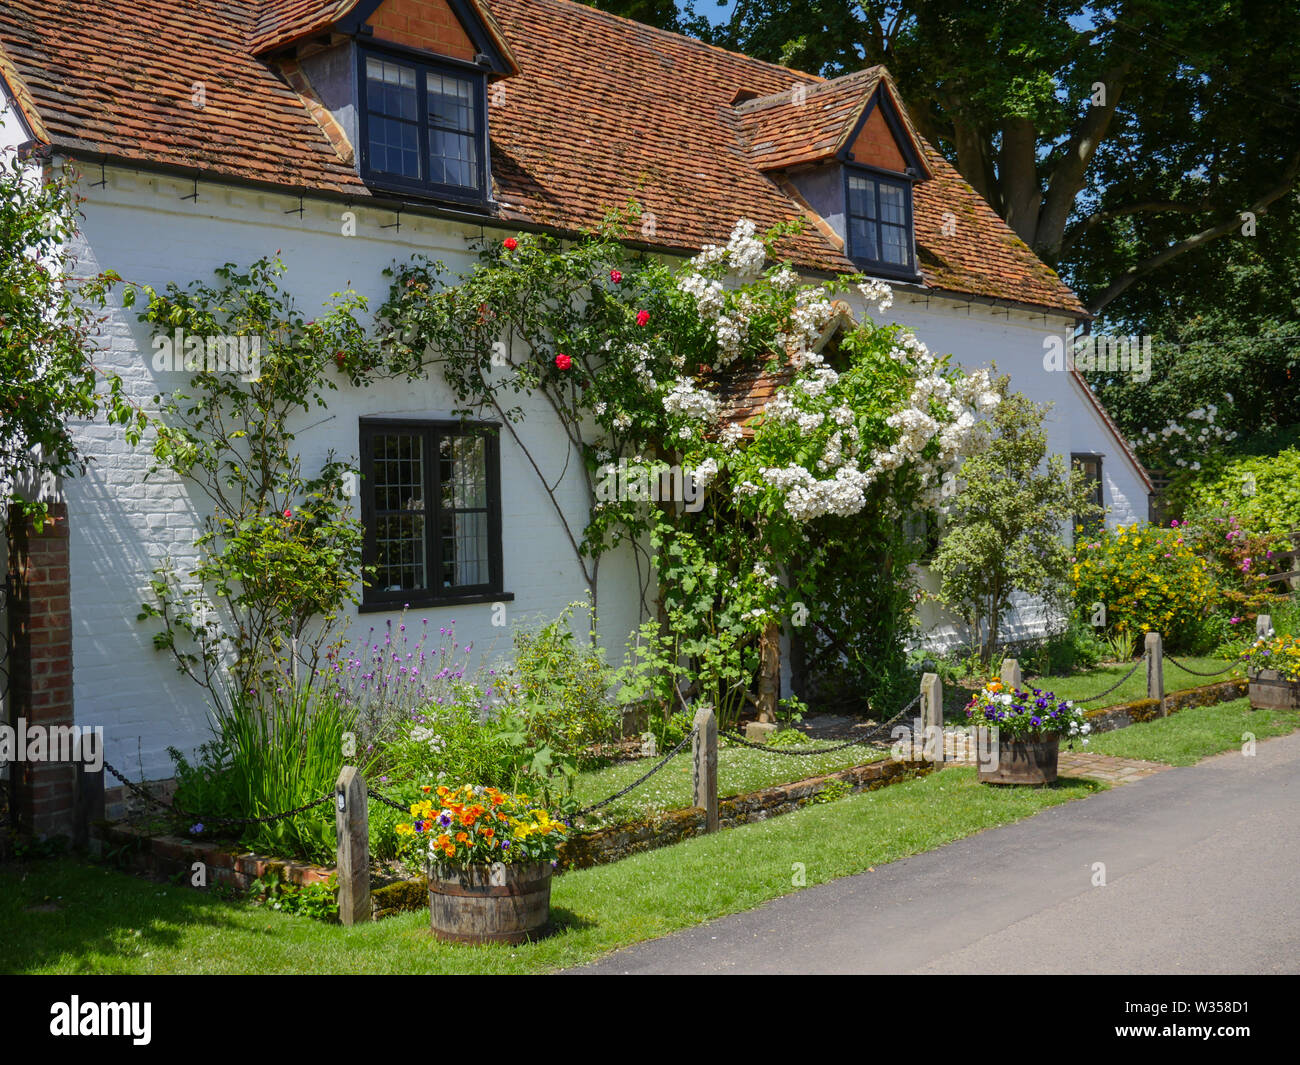 beautiful village, Cottage with Flowers, on the Ridgeway Path, North Stoke, Wallingford, Oxfordshire, England, UK, GB. Stock Photo